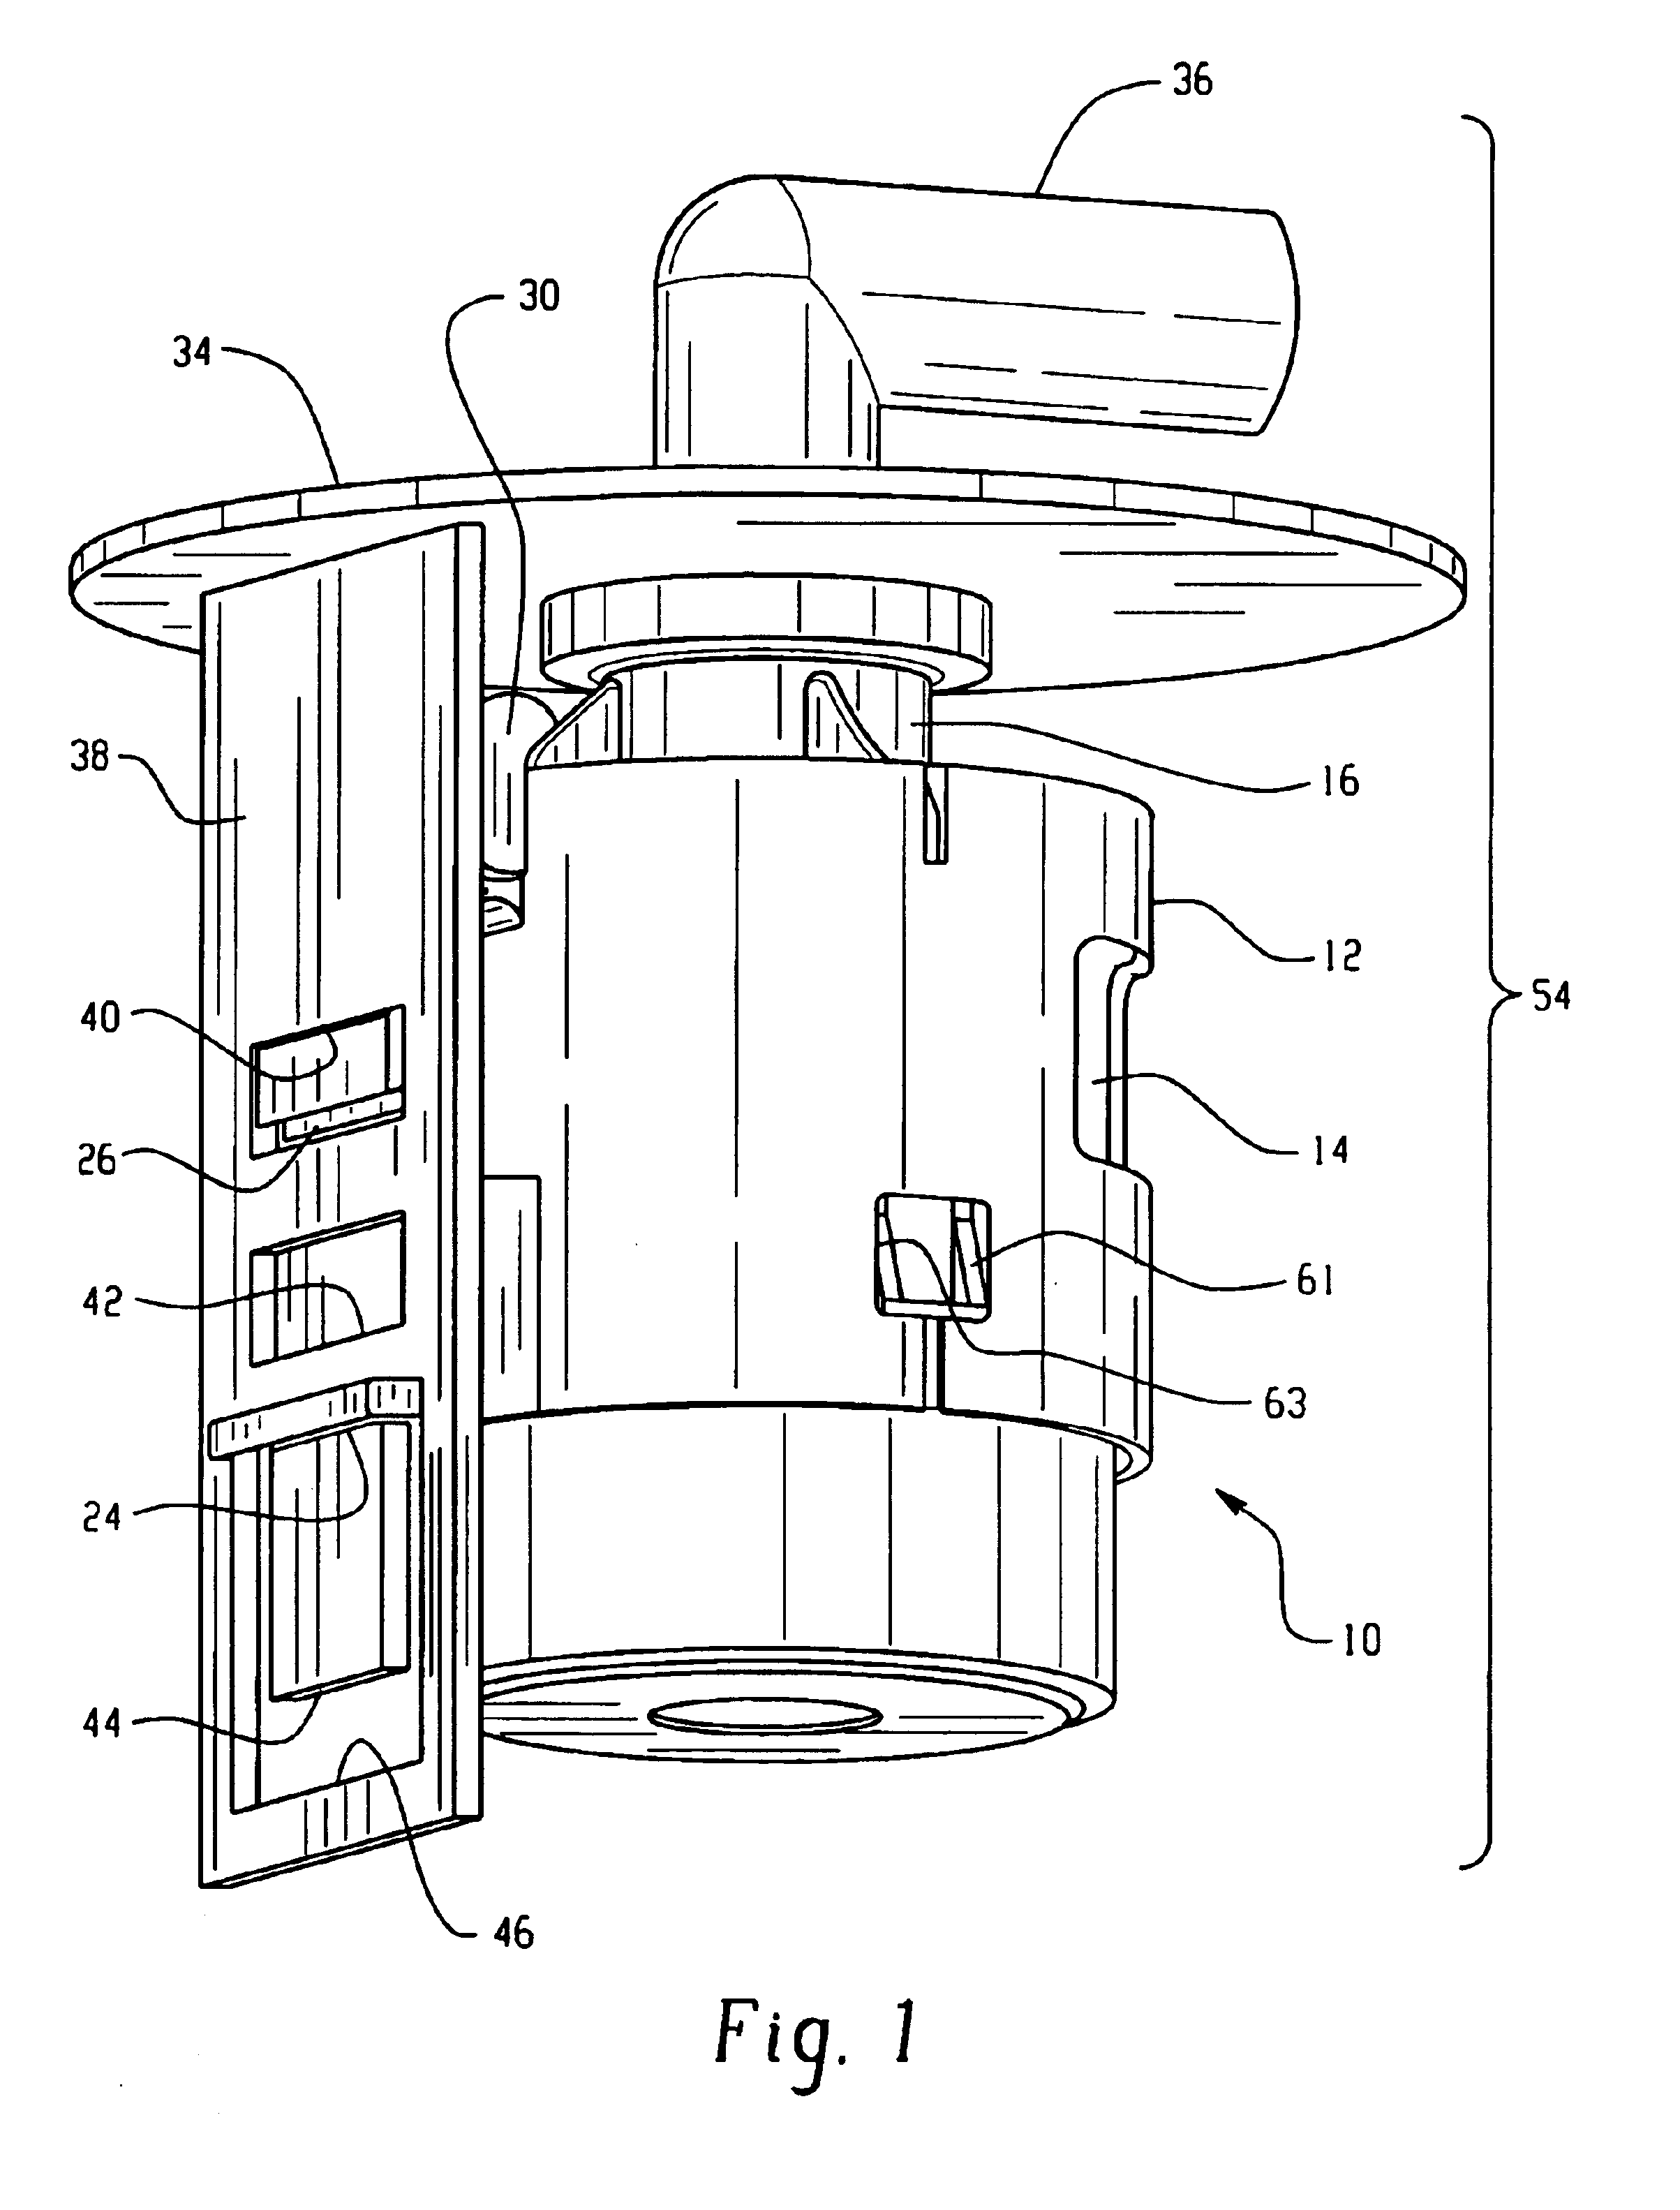 Mounting a fuel vapor management valve internally to a gas tank